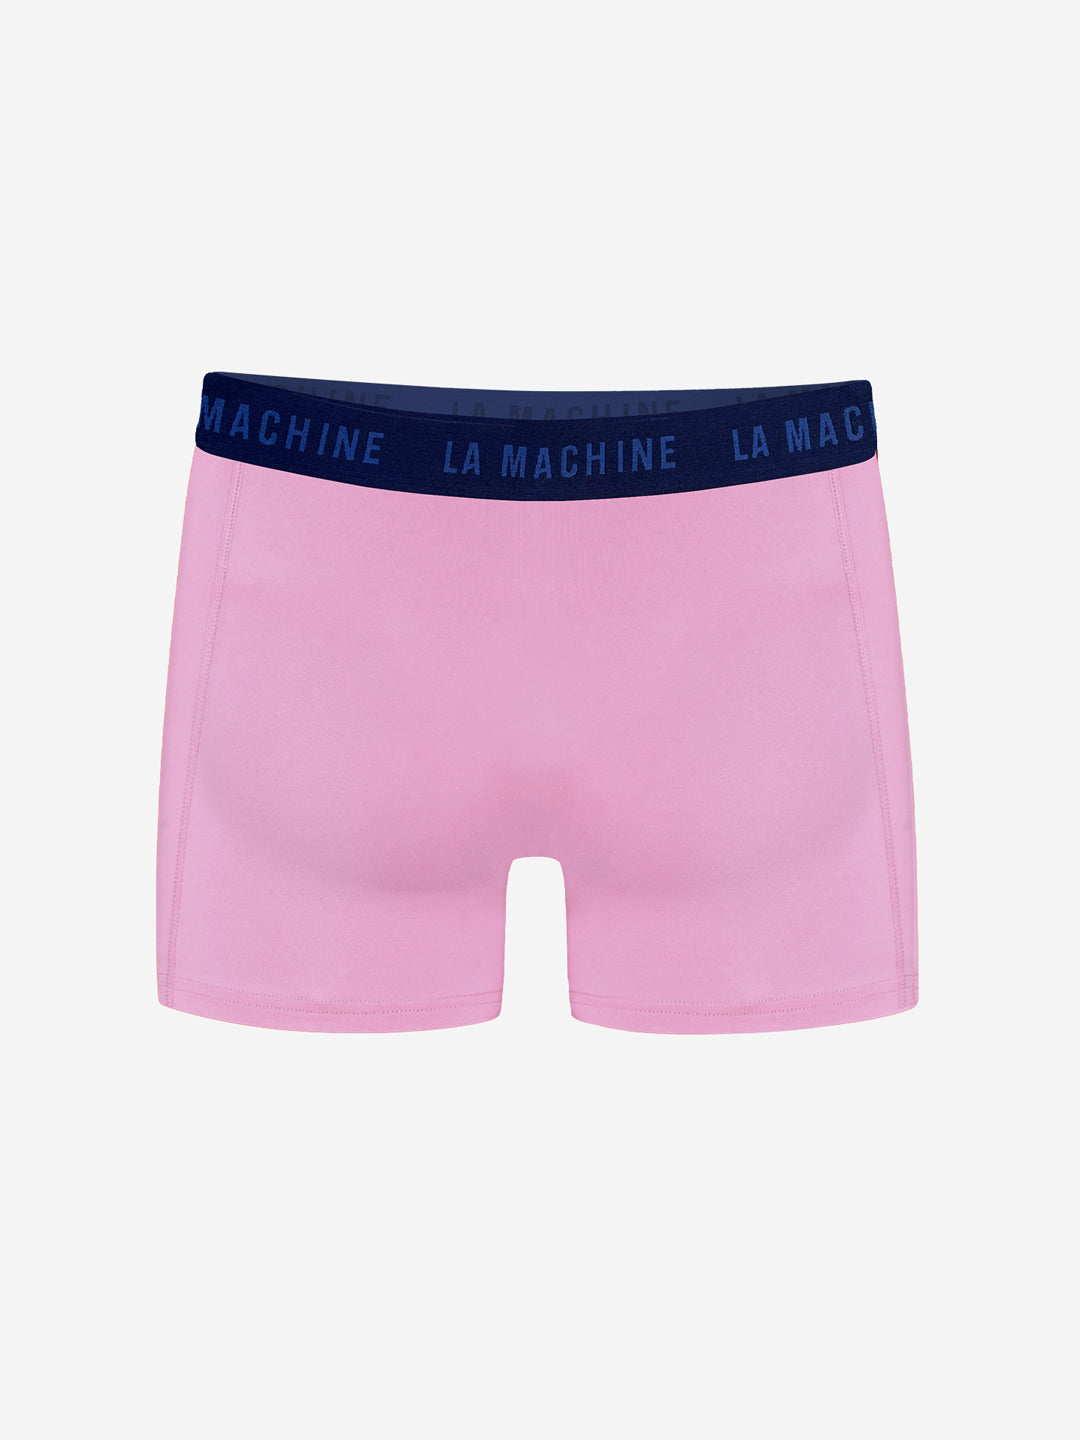 La Machine - Boxershorts - Giro Pink